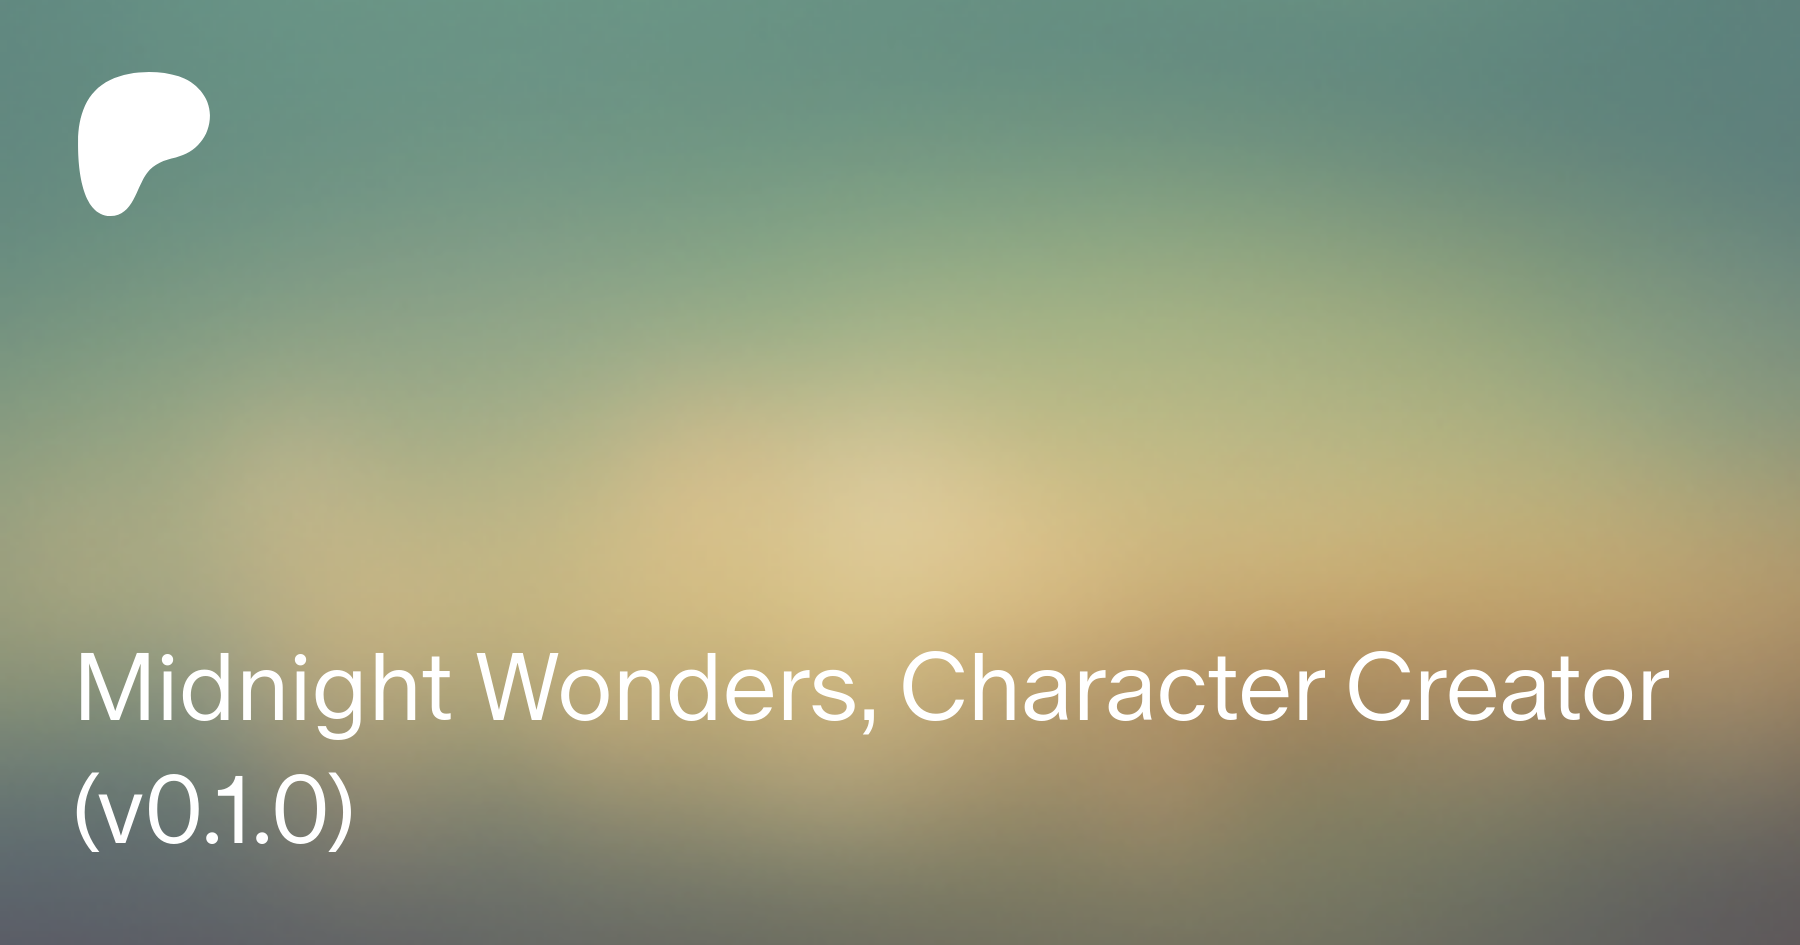 Geeklopedia Worldwide - #In_Character Hi everyone, Today on